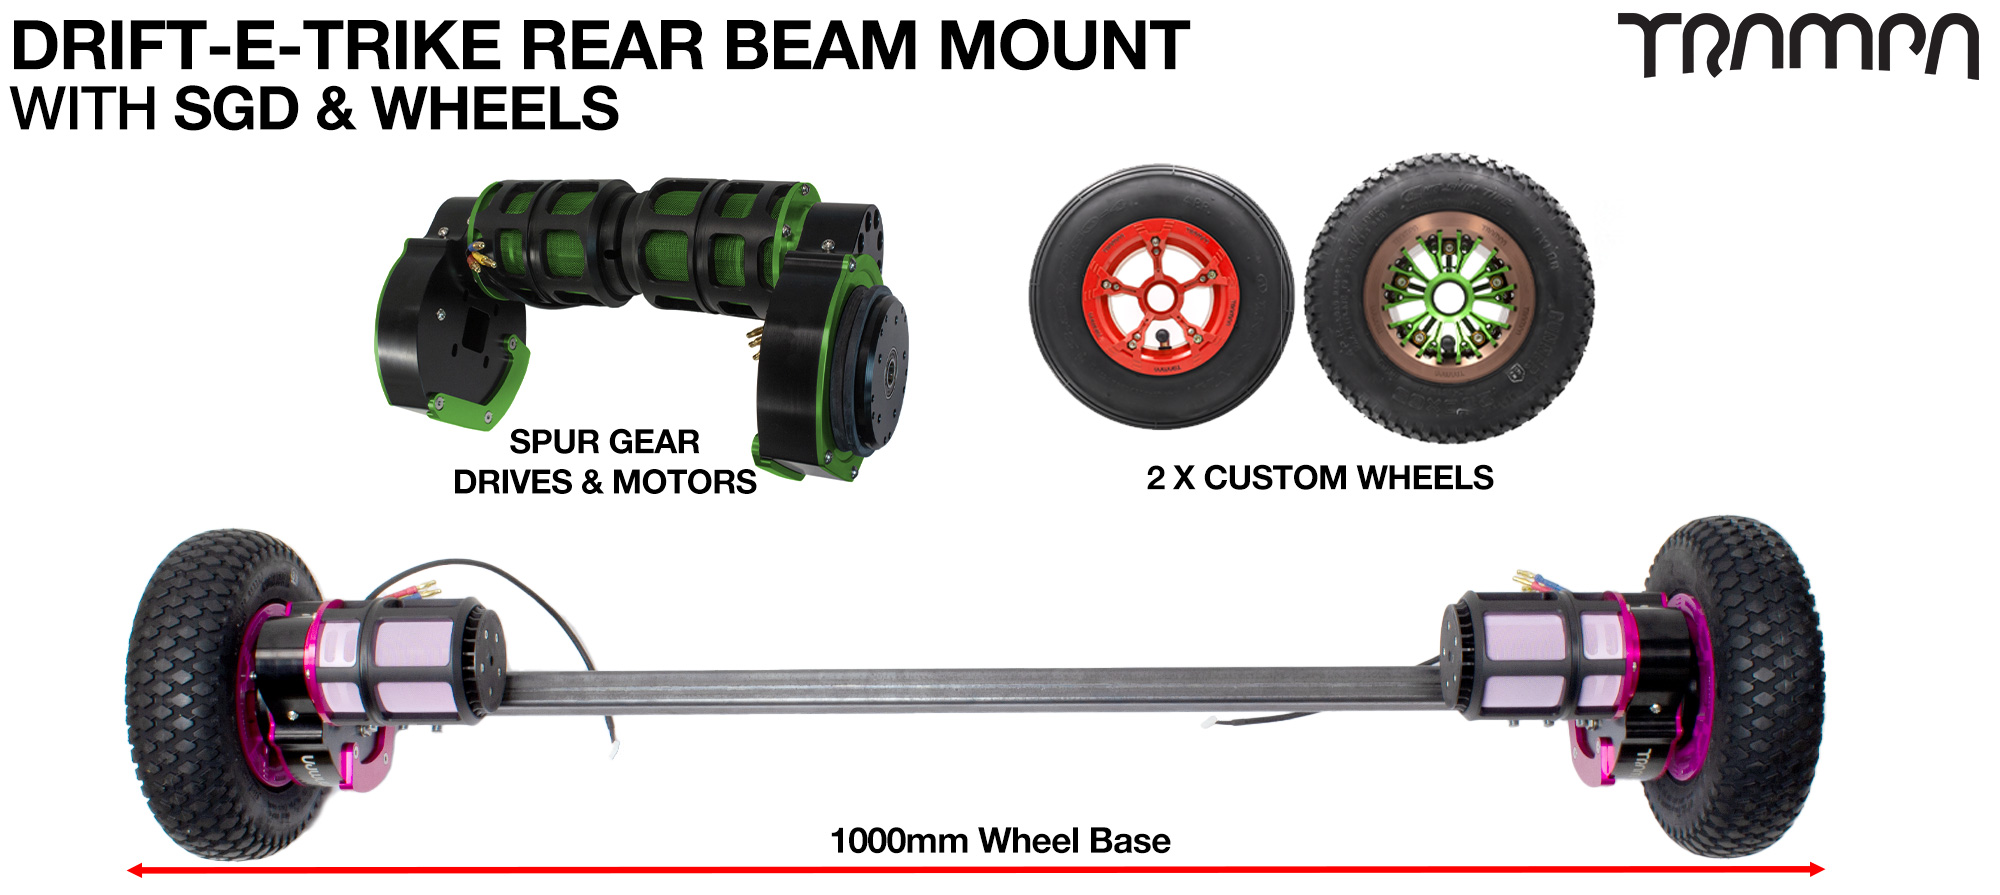 REAR BEAM SPUR GEAR DRIVE Assembled Drivetrain with 2x Rear Wheels